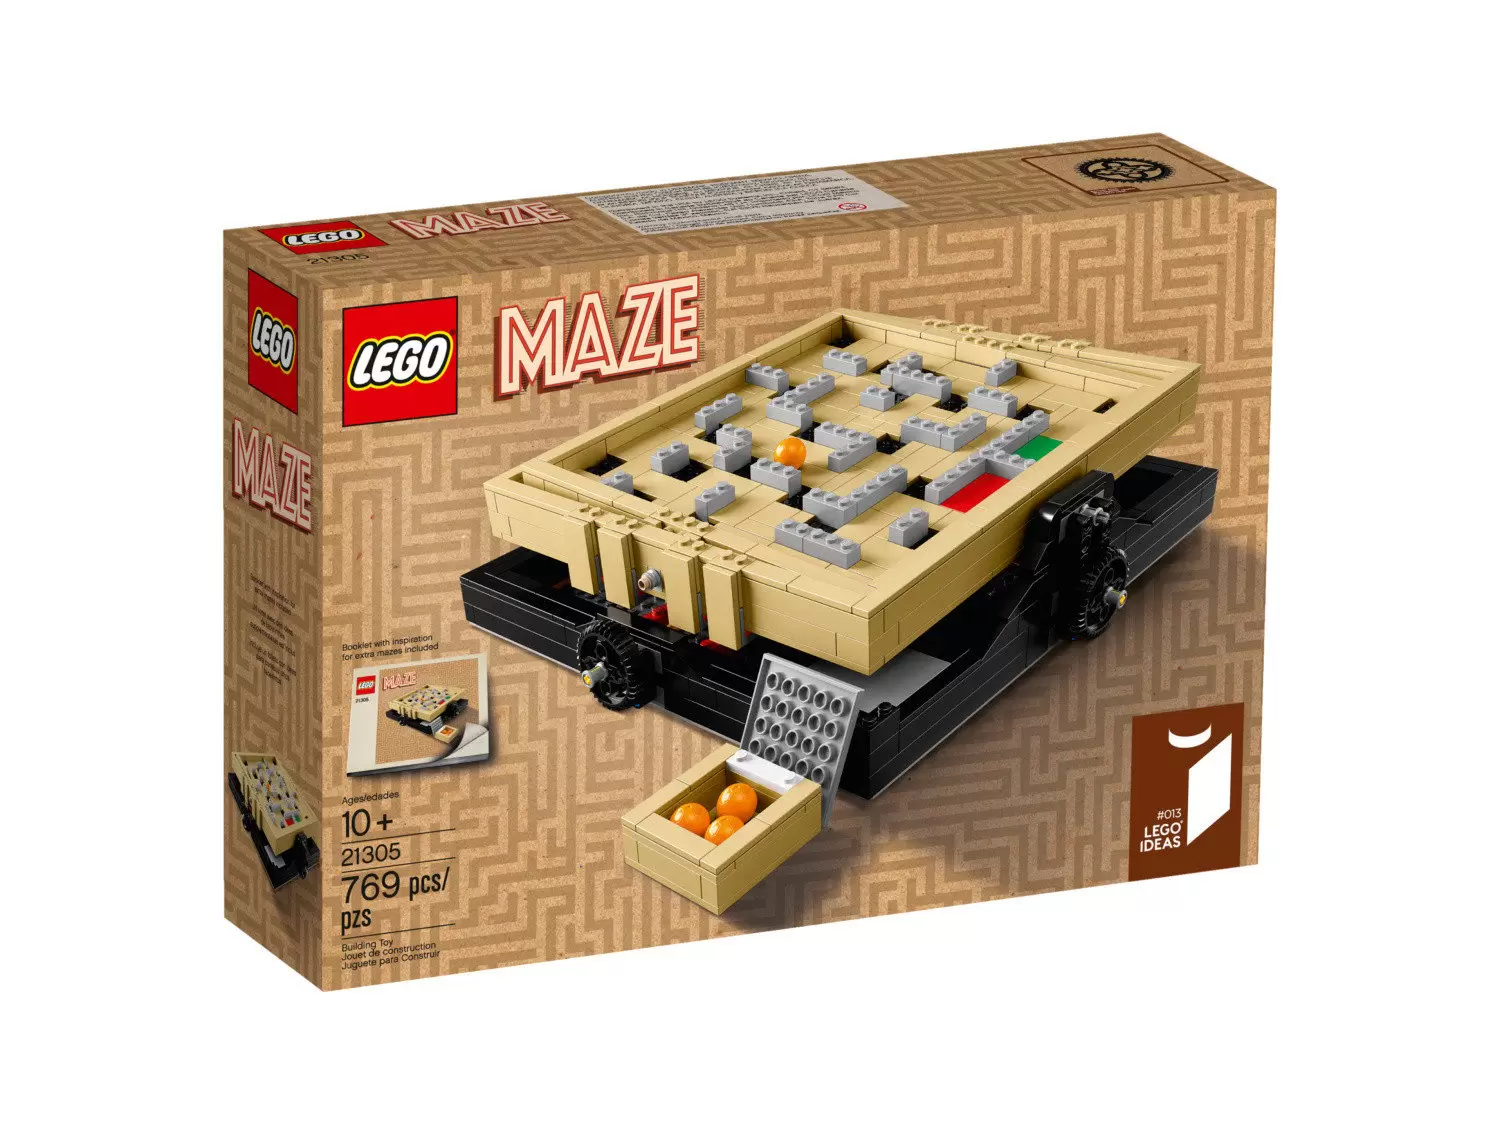 LEGO Ideas - Maze